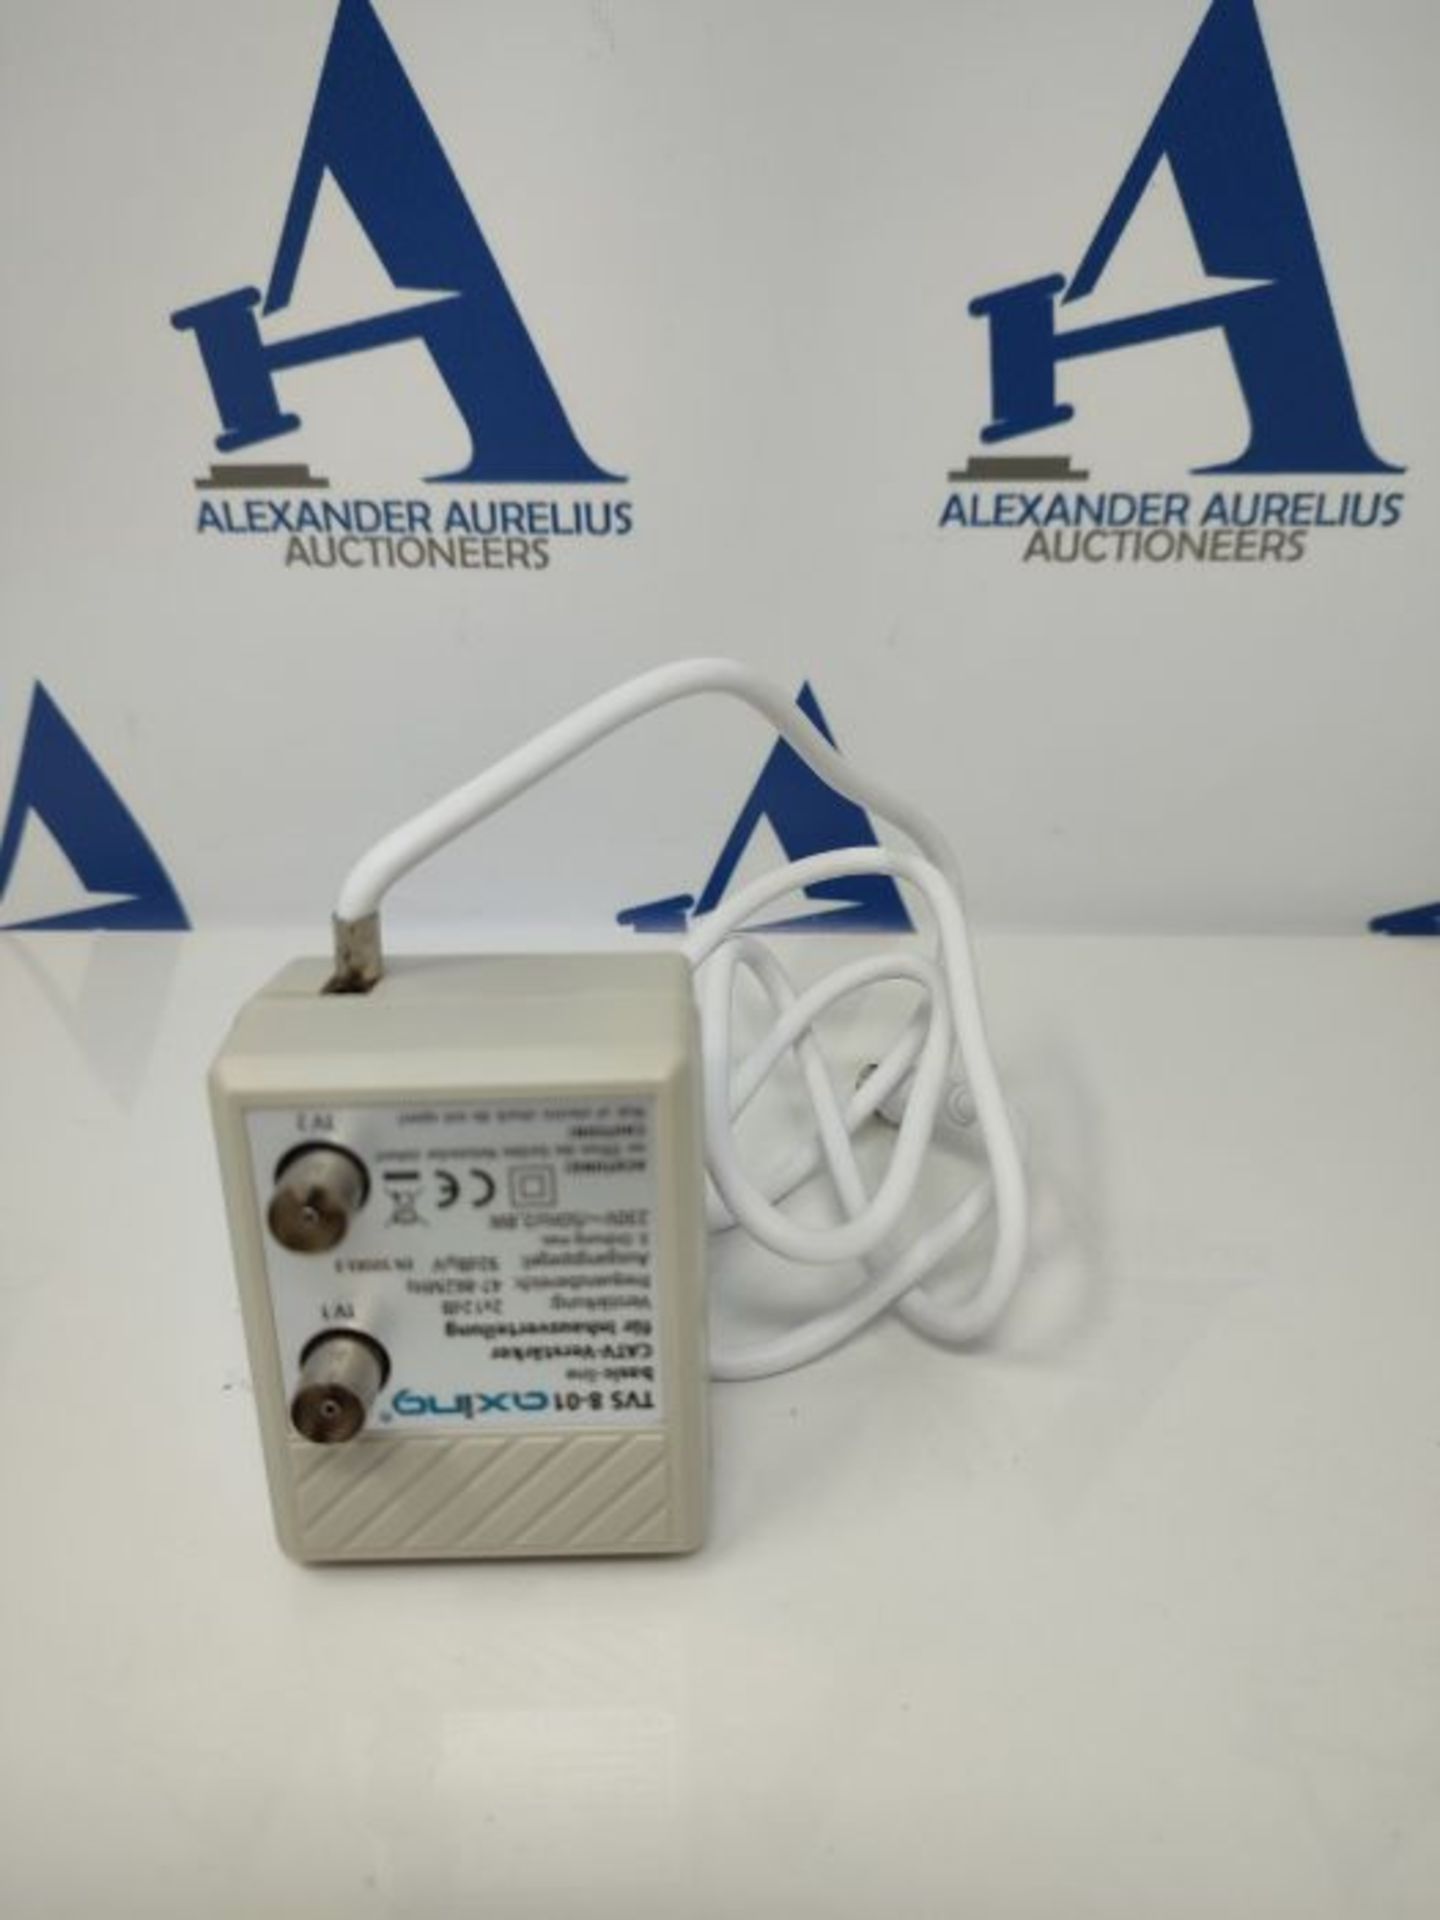 Axing TVS 8-01 BreitbandverstÃ¤rker mit 2 AusgÃ¤ngen (2 x 12 dB) fÃ¼r DTT und FM - Image 2 of 2